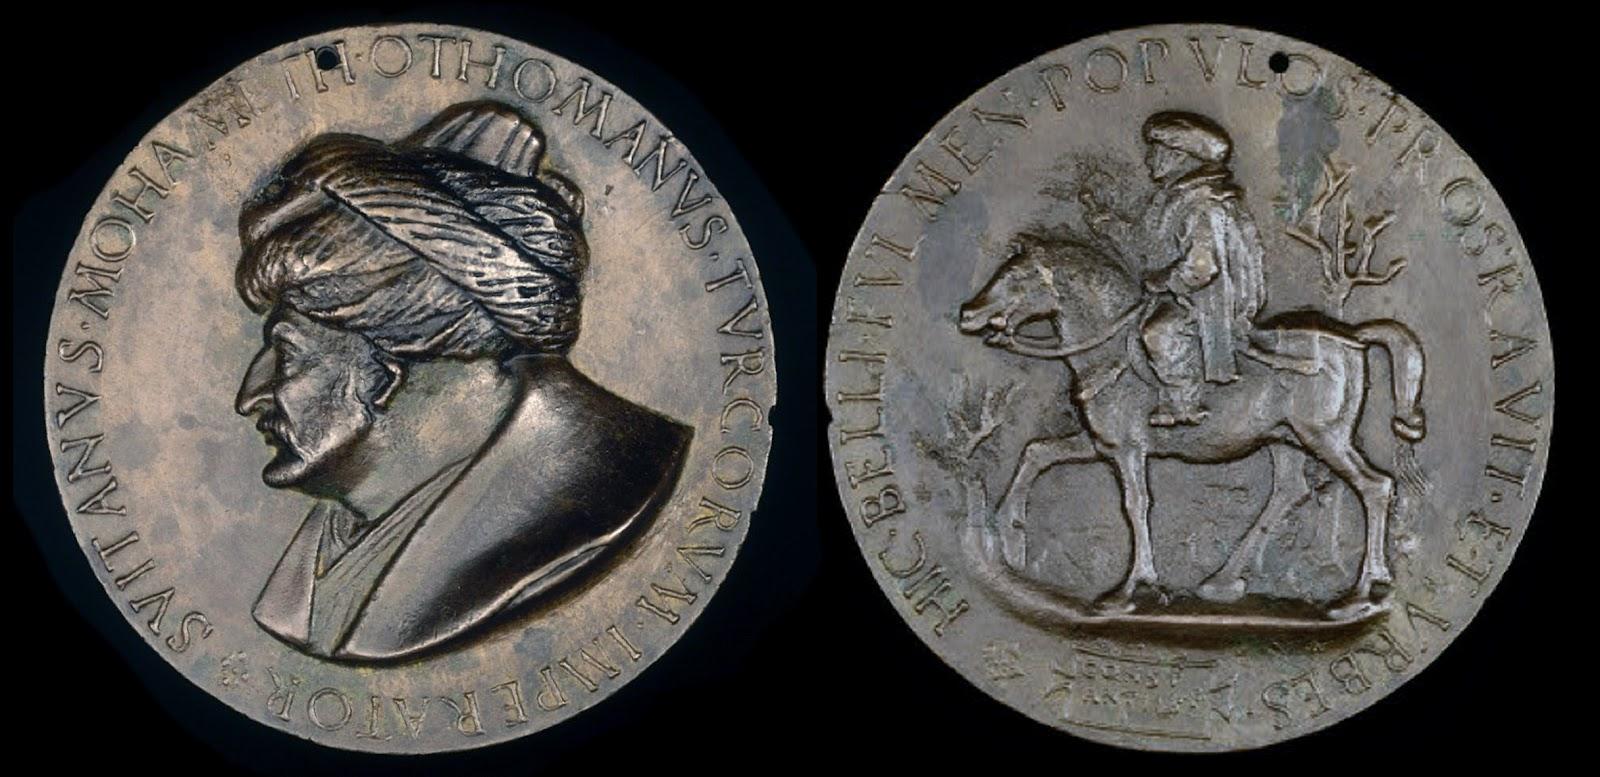 Costanzo de Ferrara Mehmet II medal